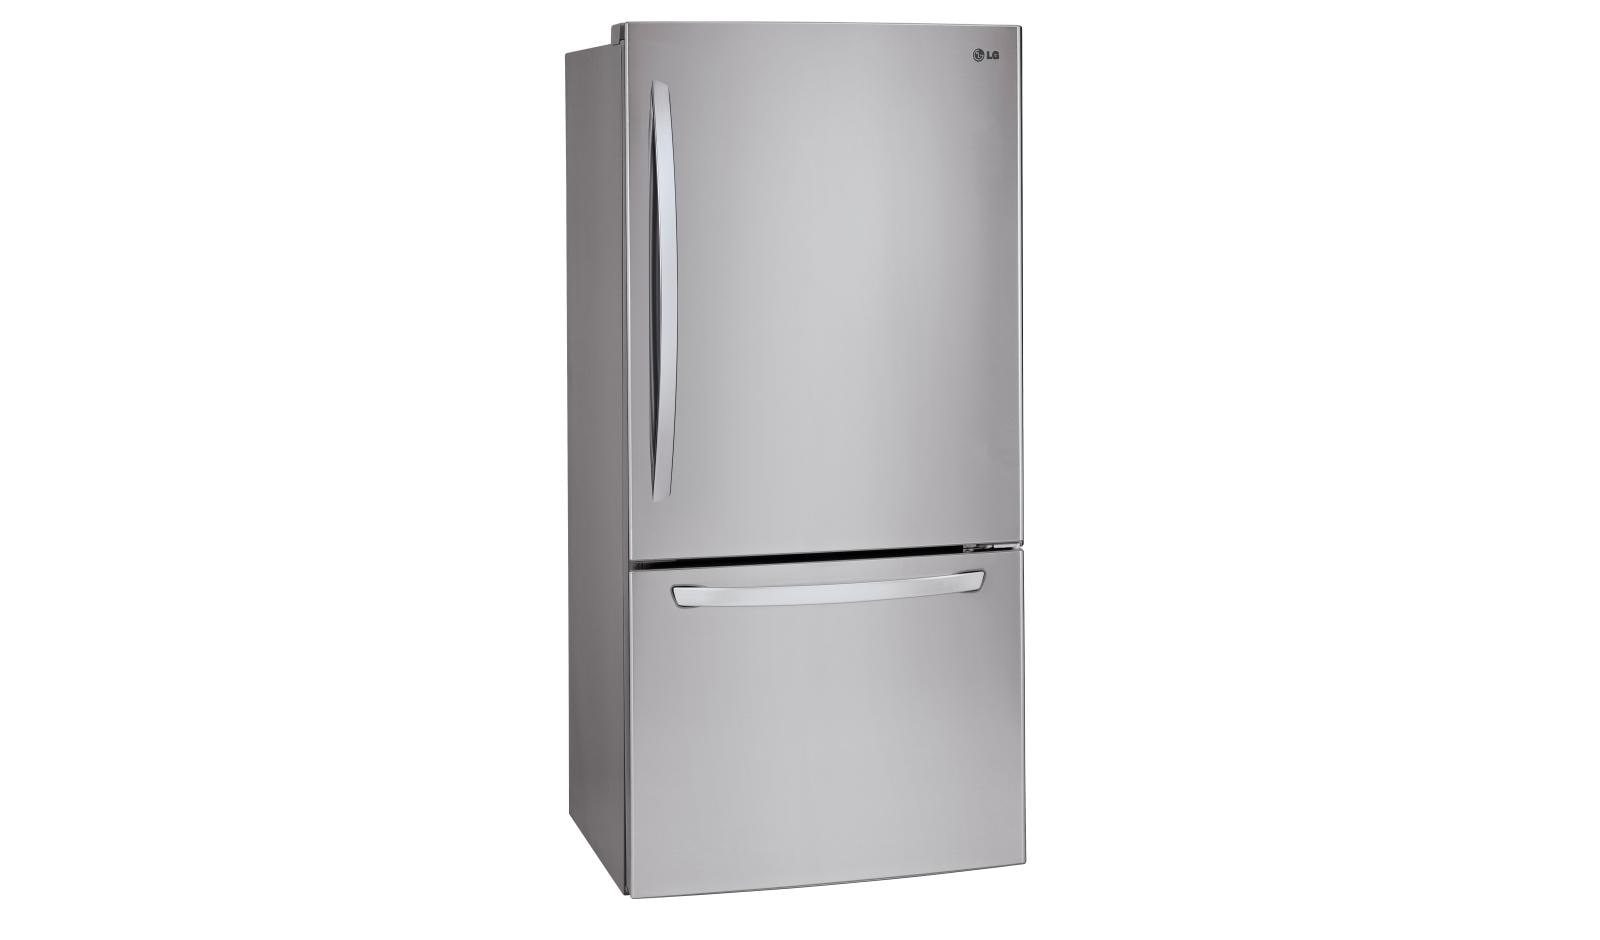 LG LDCS22220S Large 30 Inch Wide Bottom Freezer Refrigerator LG USA